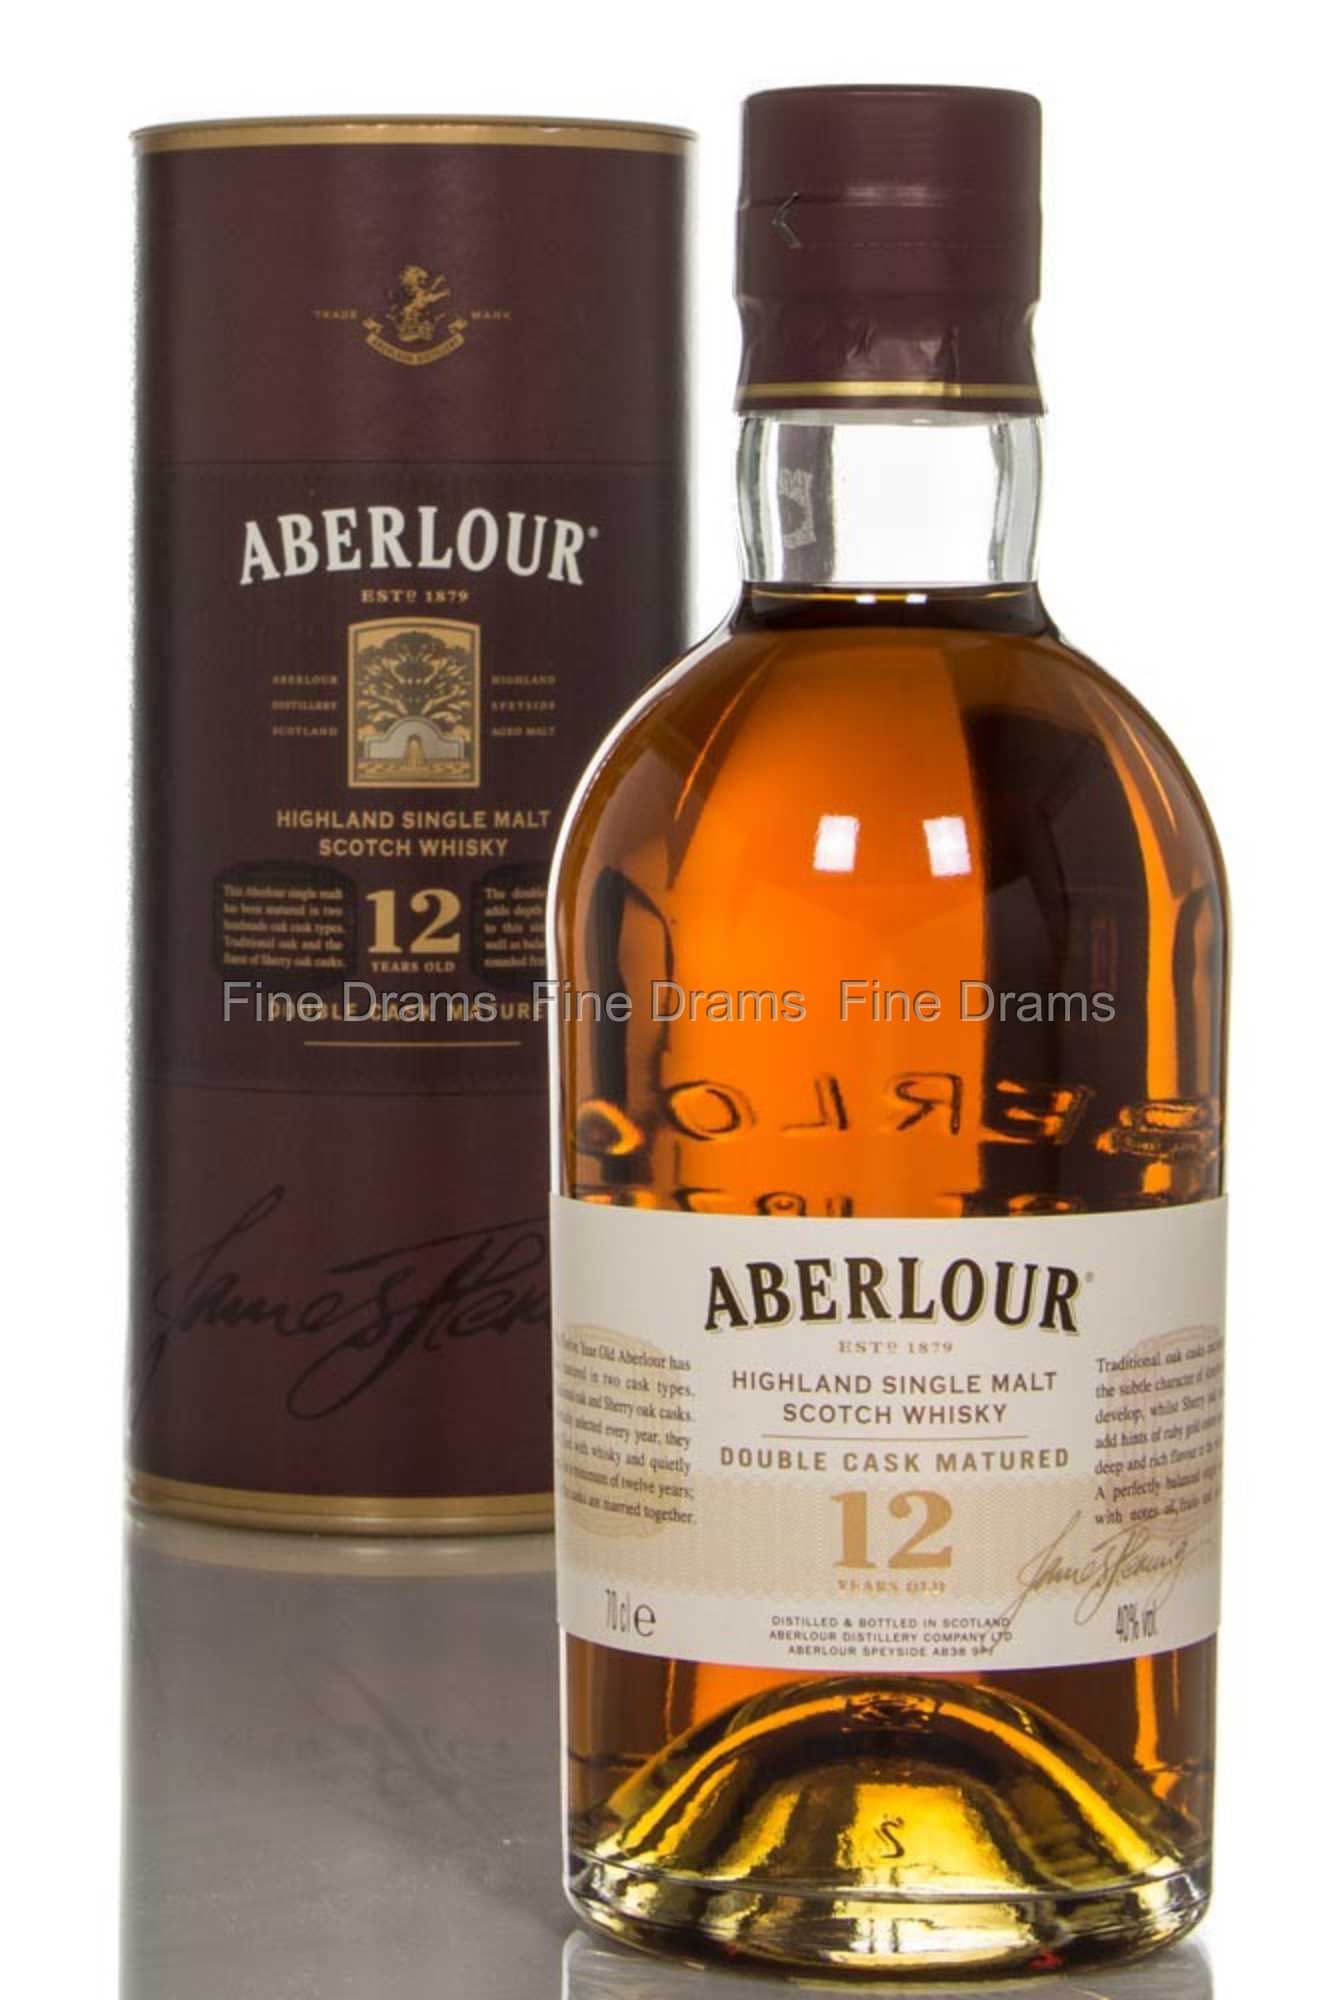 Aberlour 12 Years Old Double Cask Matured Highland Single Malt Scotch Whisky